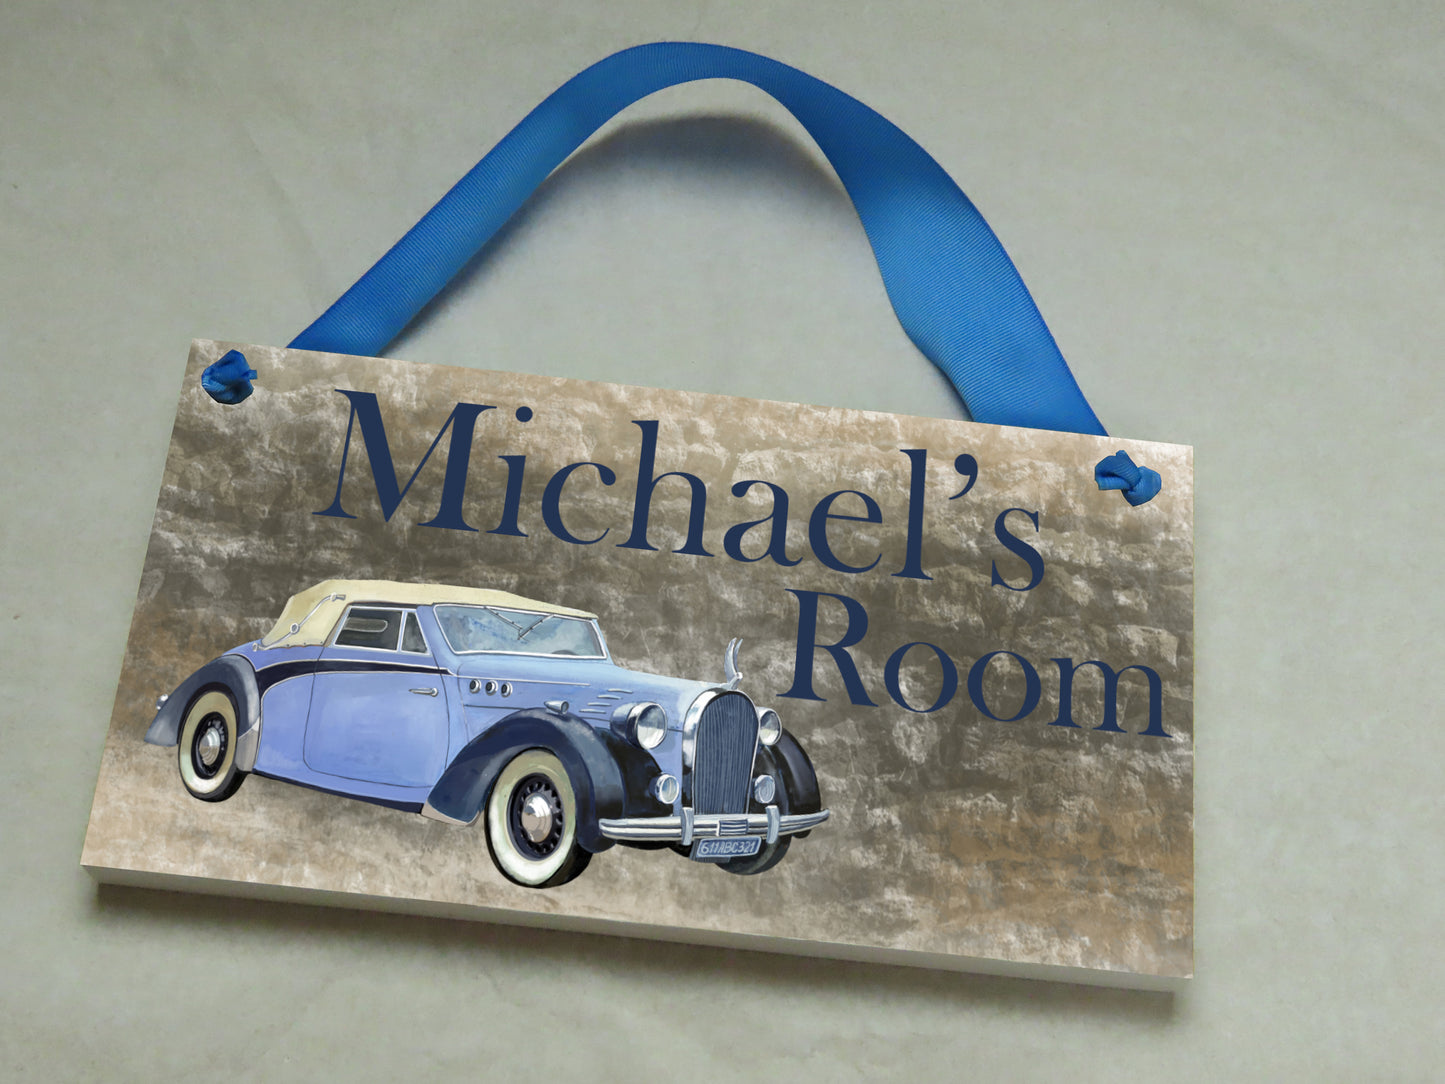 Blue Vintage Car Door Sign